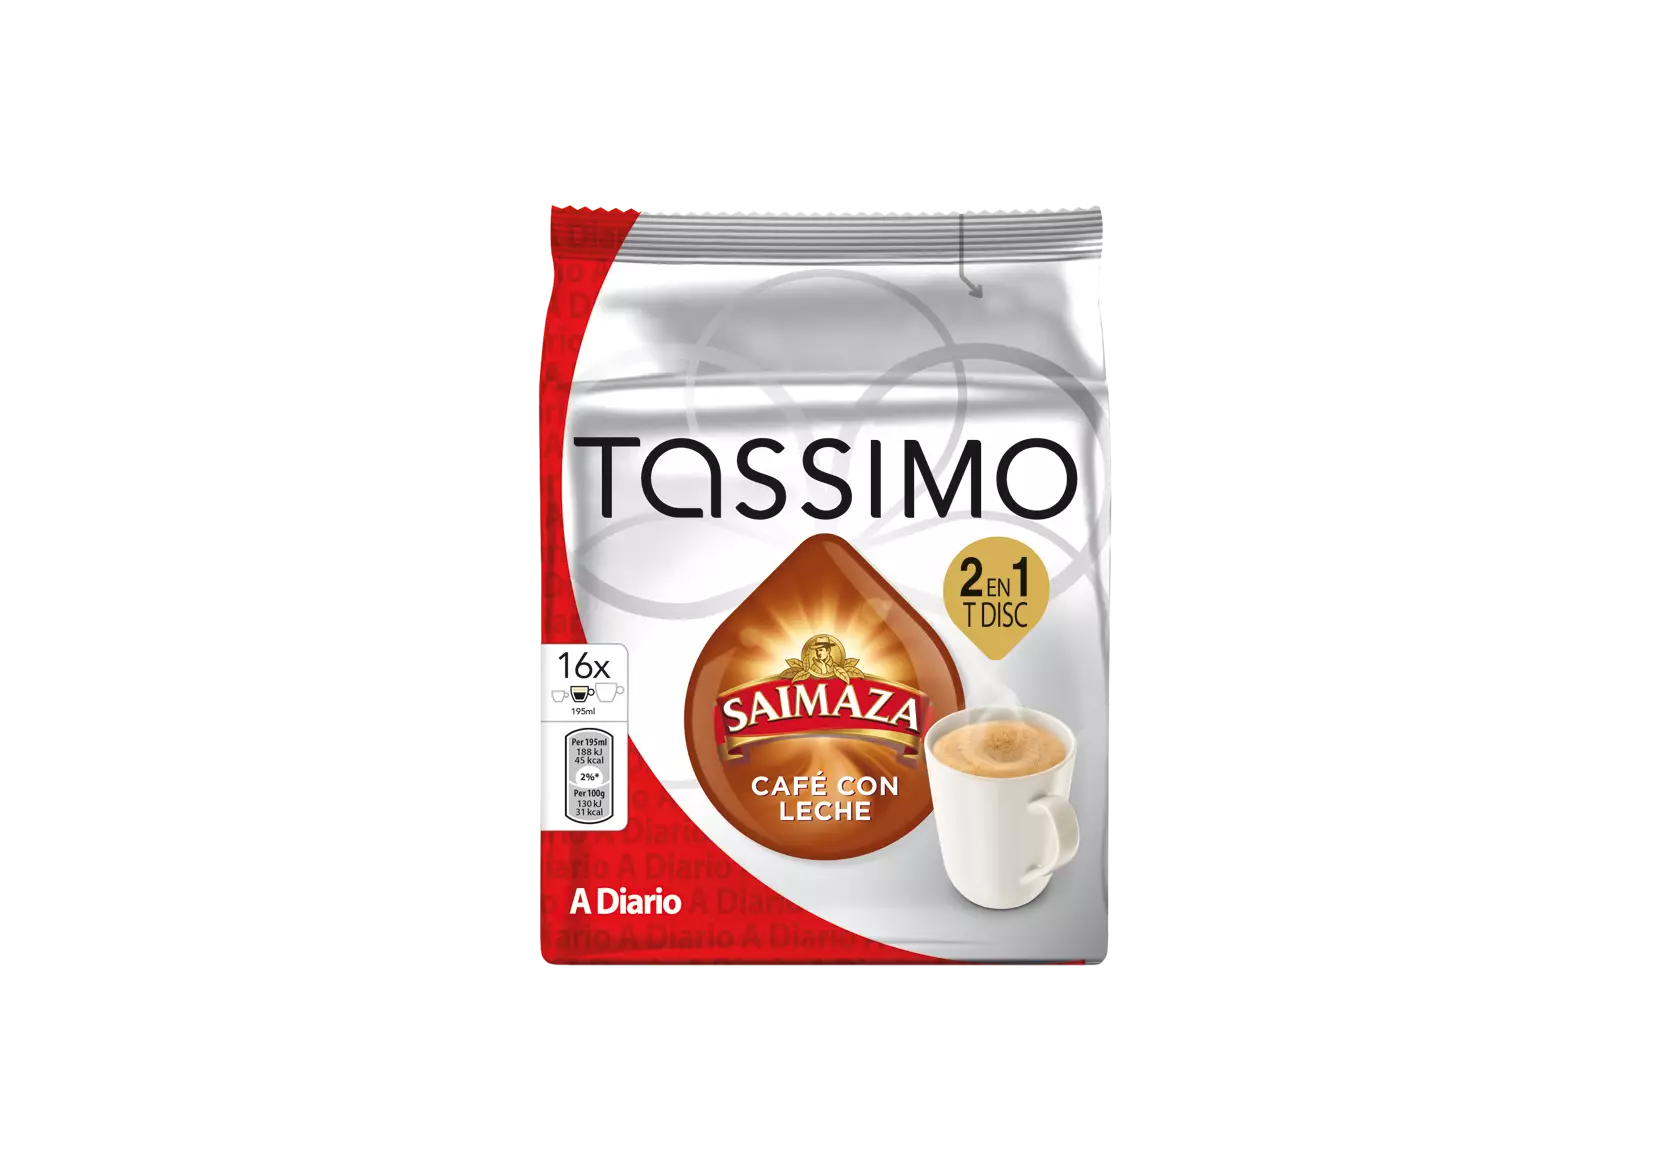 Tassimo lanza nueva variedad de Café con Leche - HostelVending